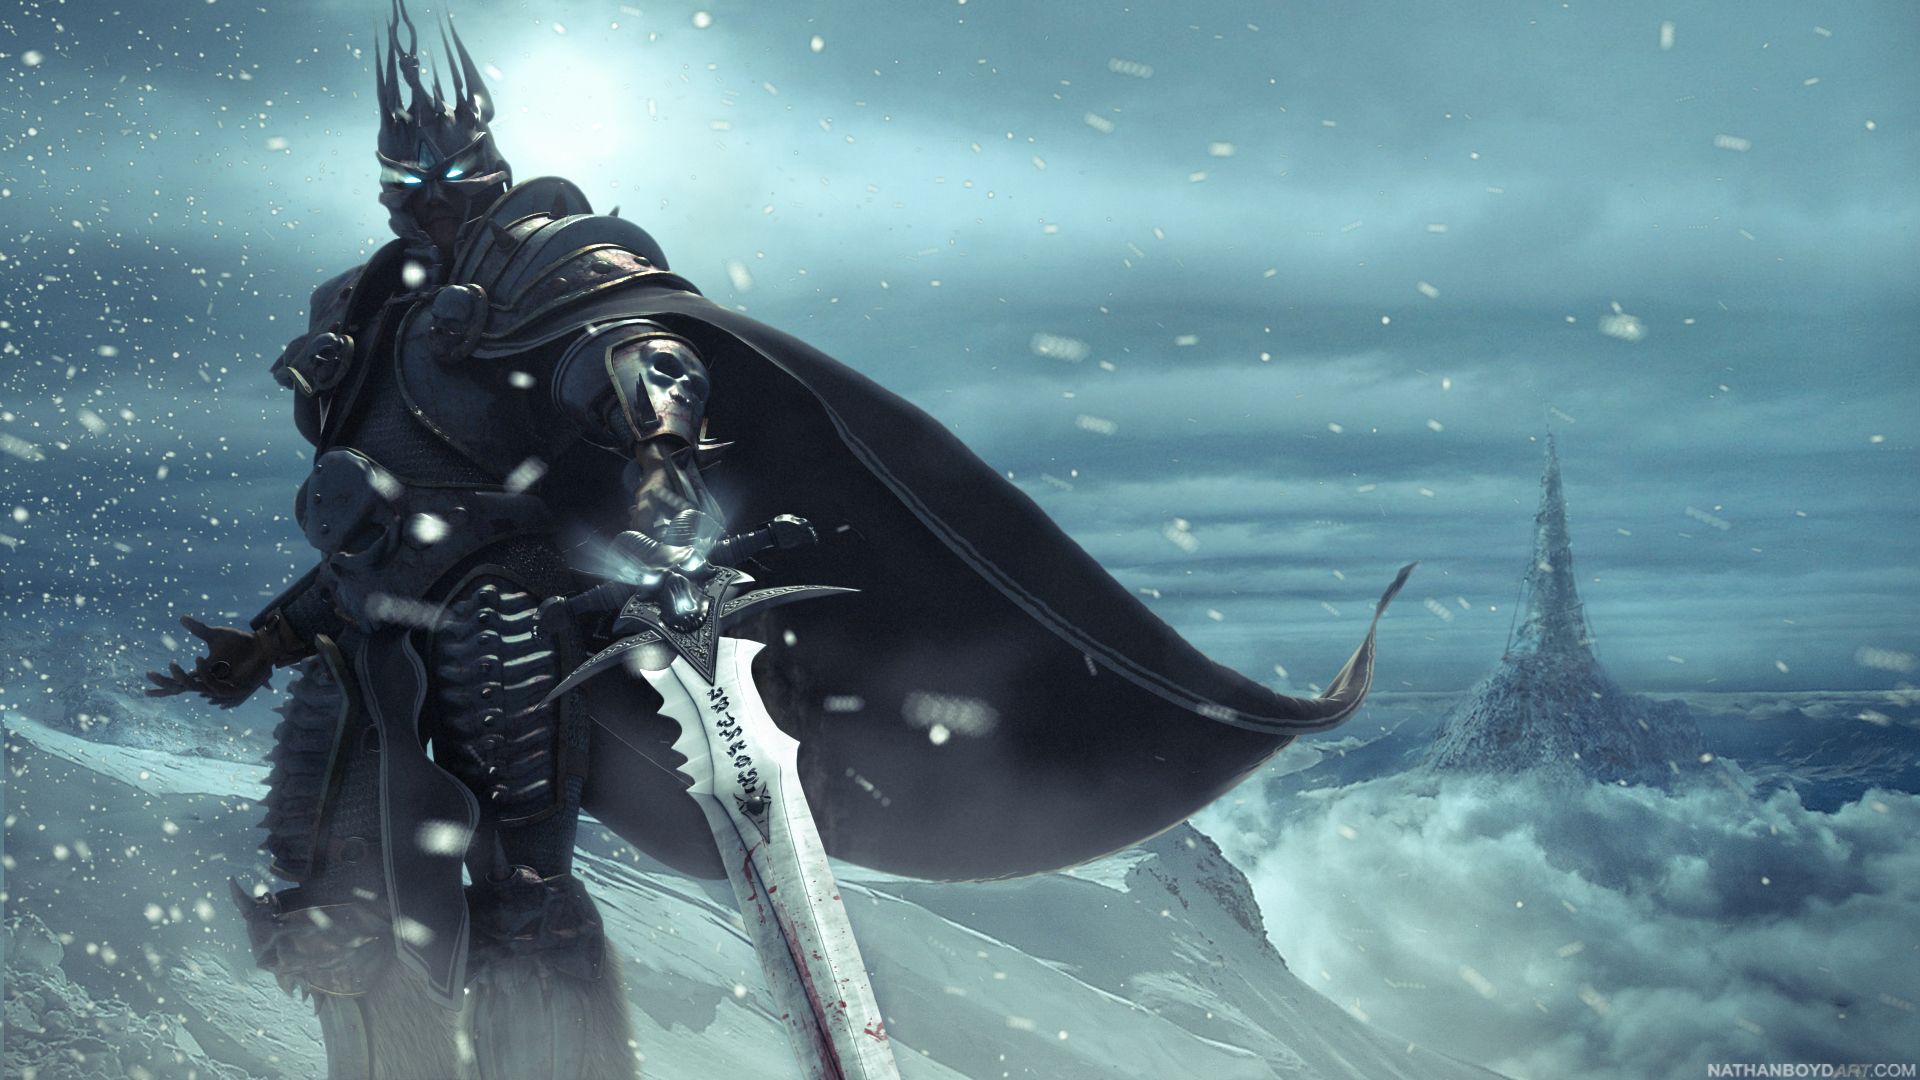 Video games, snow, Lich King, armor, Arthas, artwork, swords